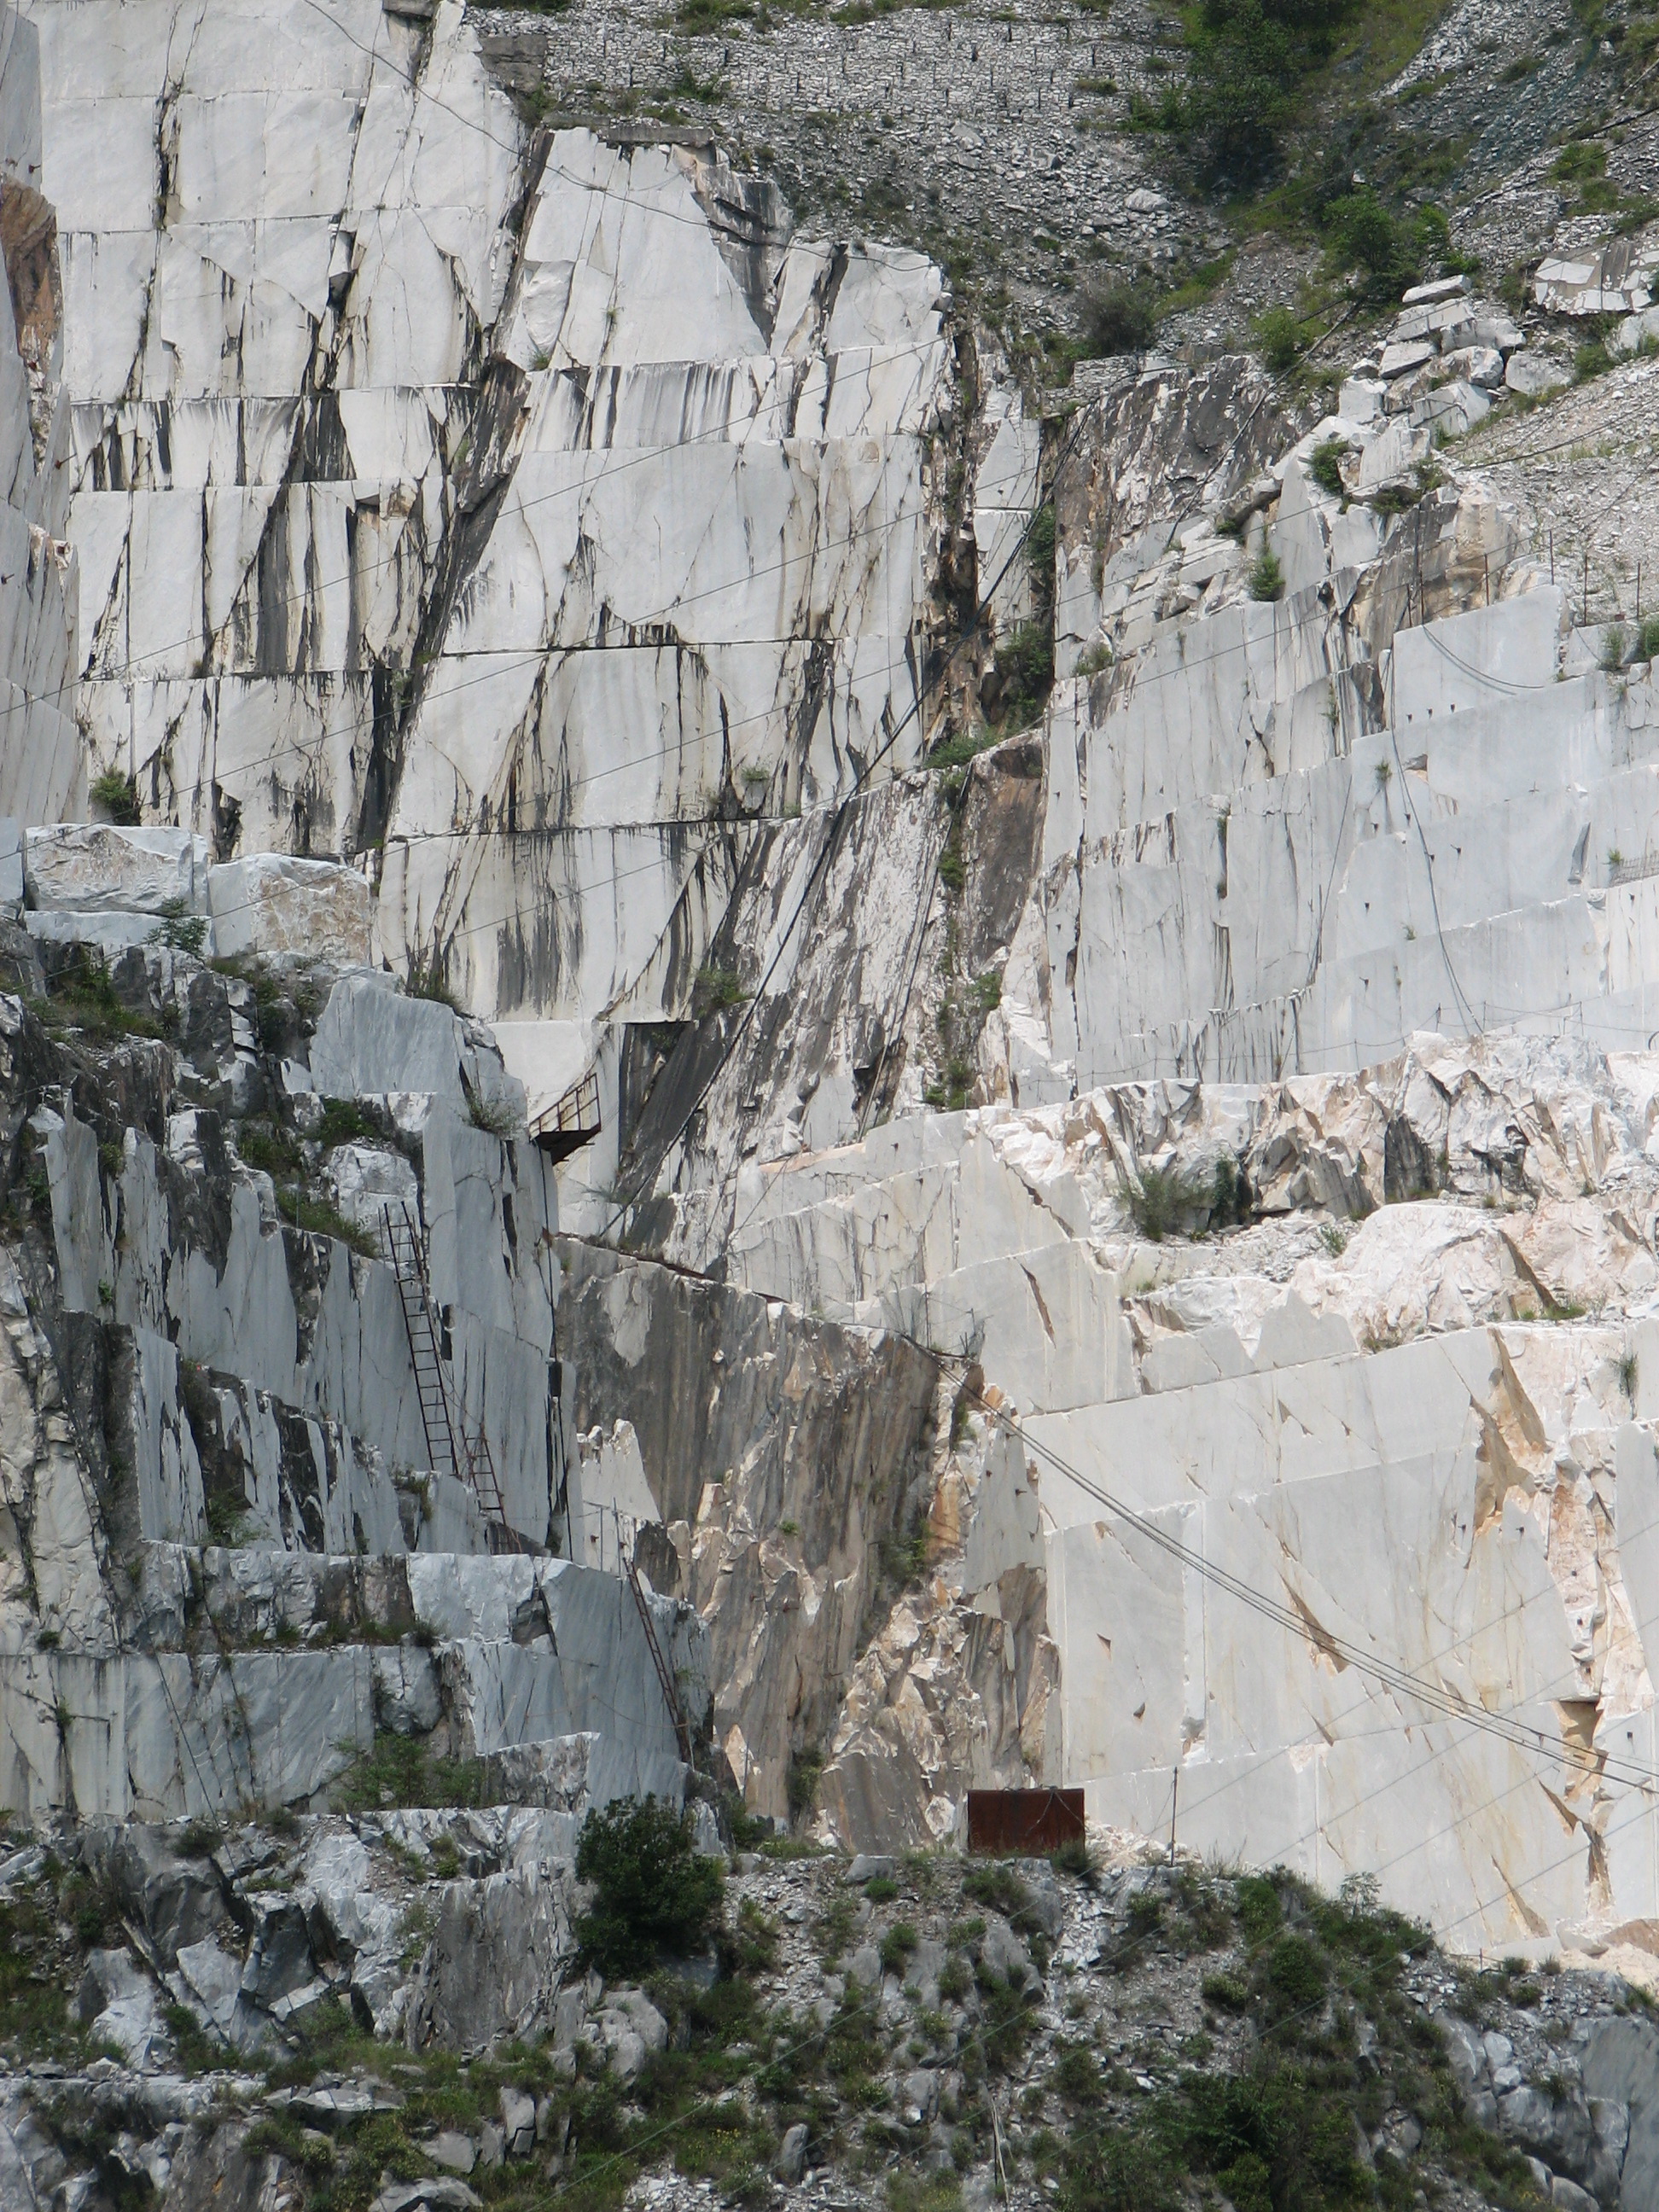  Massa Carrara marble mine 